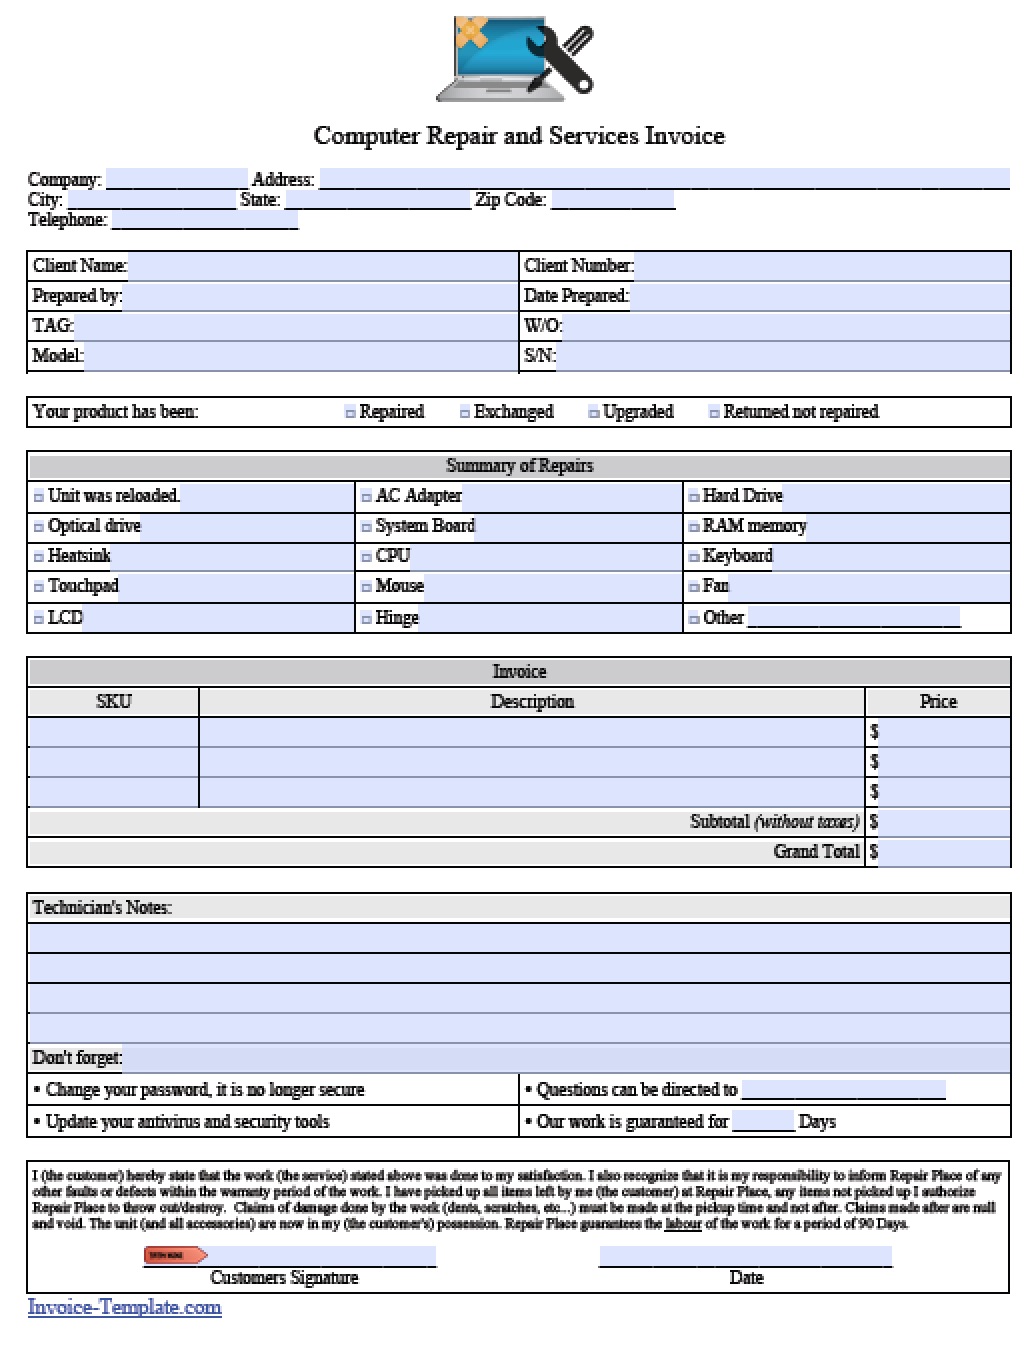 Computer Repair Invoice Template Pdf | invoice sample template